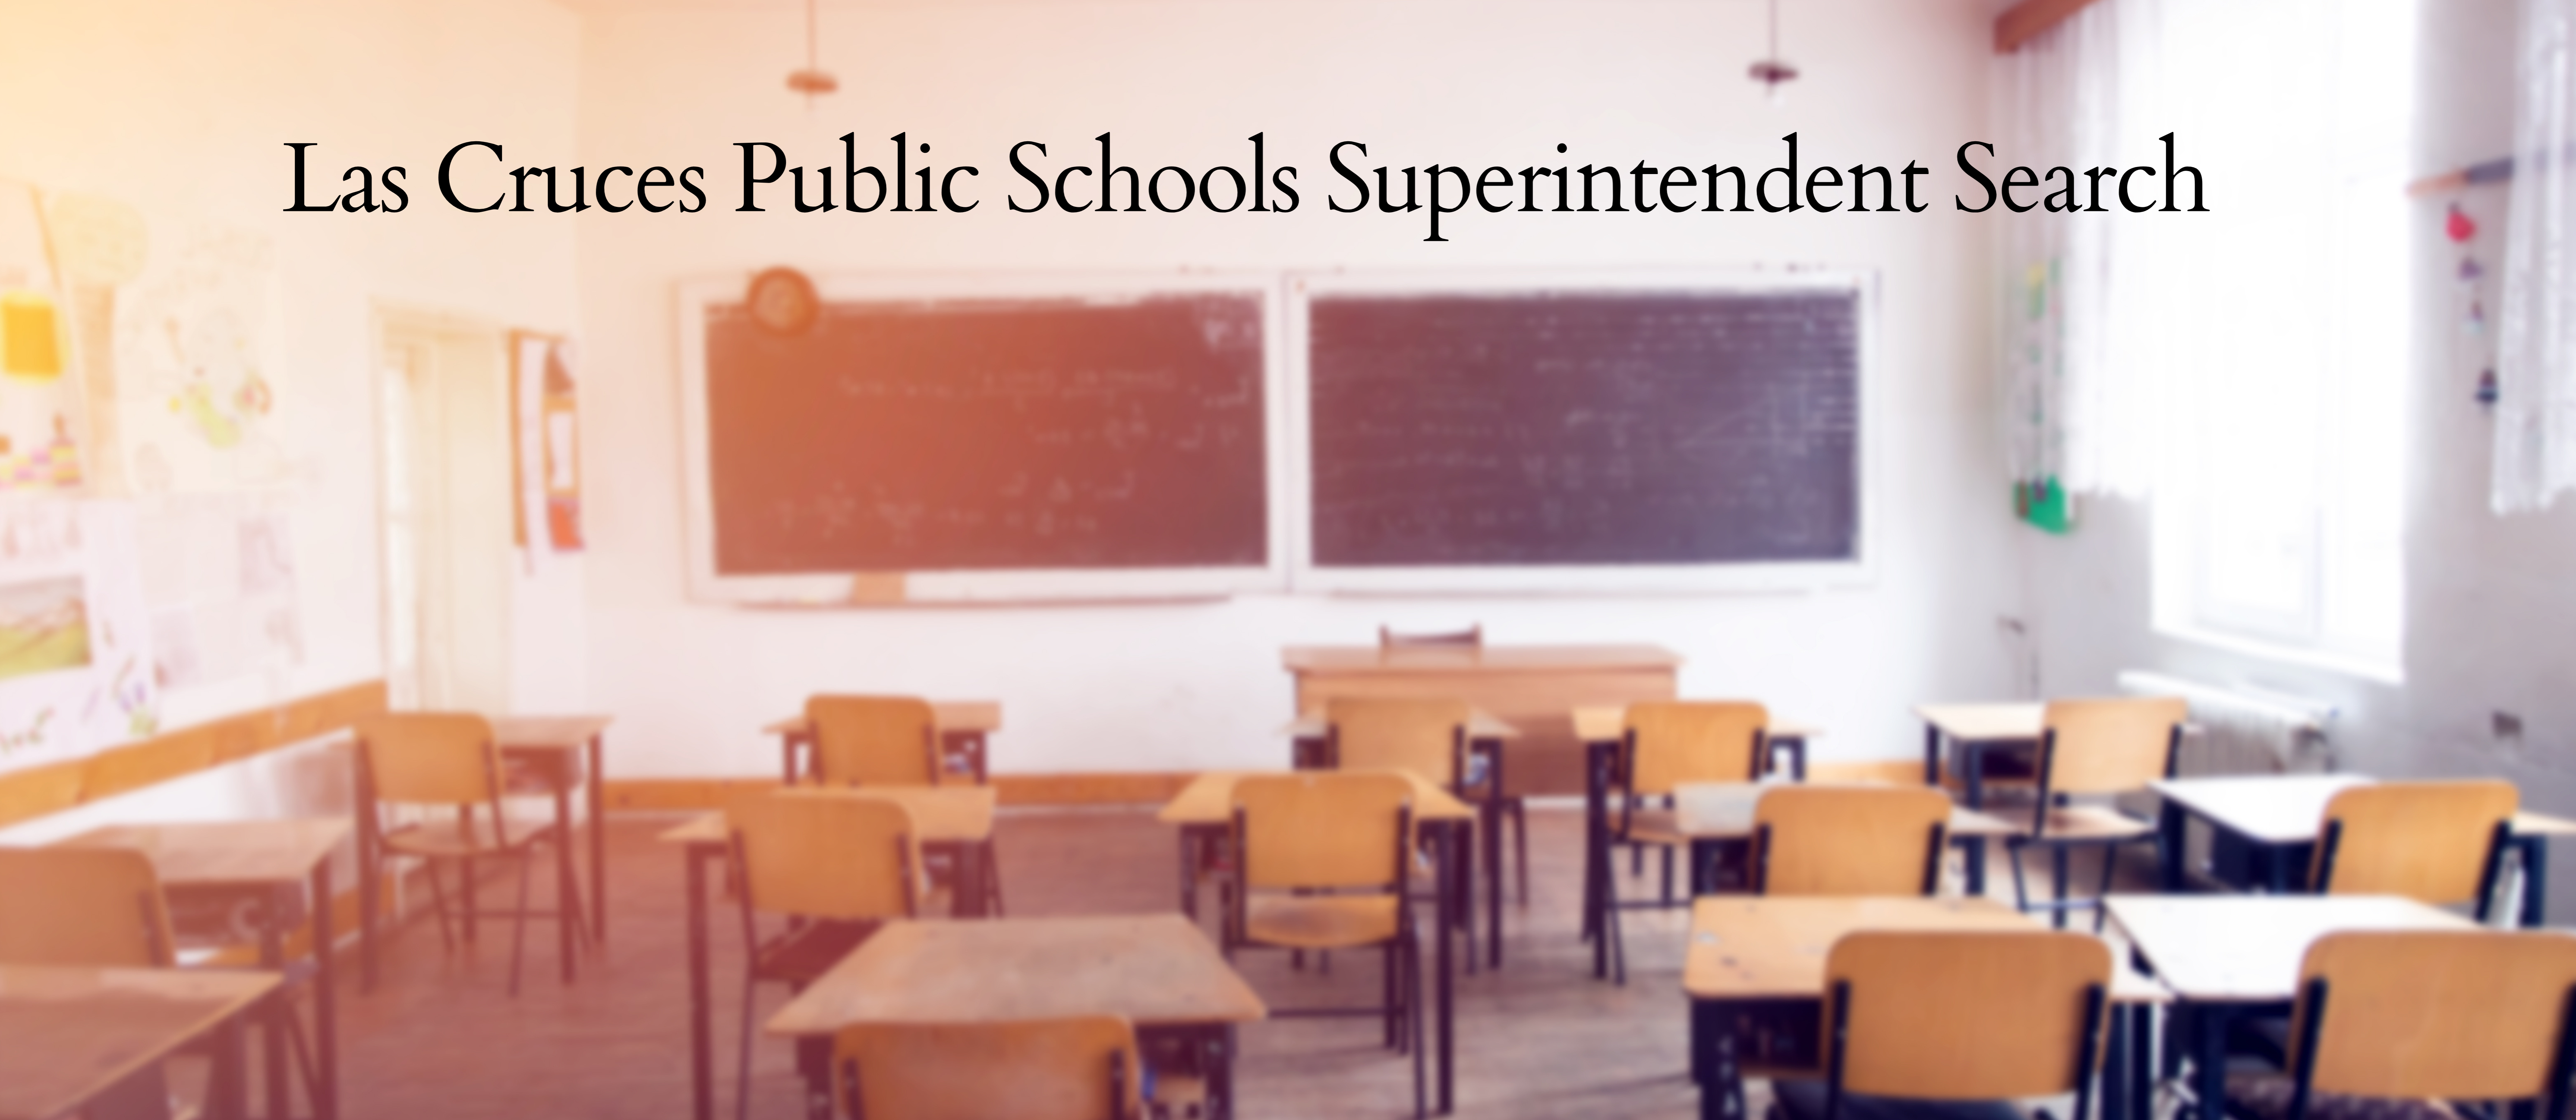 Las Cruces Public Schools Superintendent Search